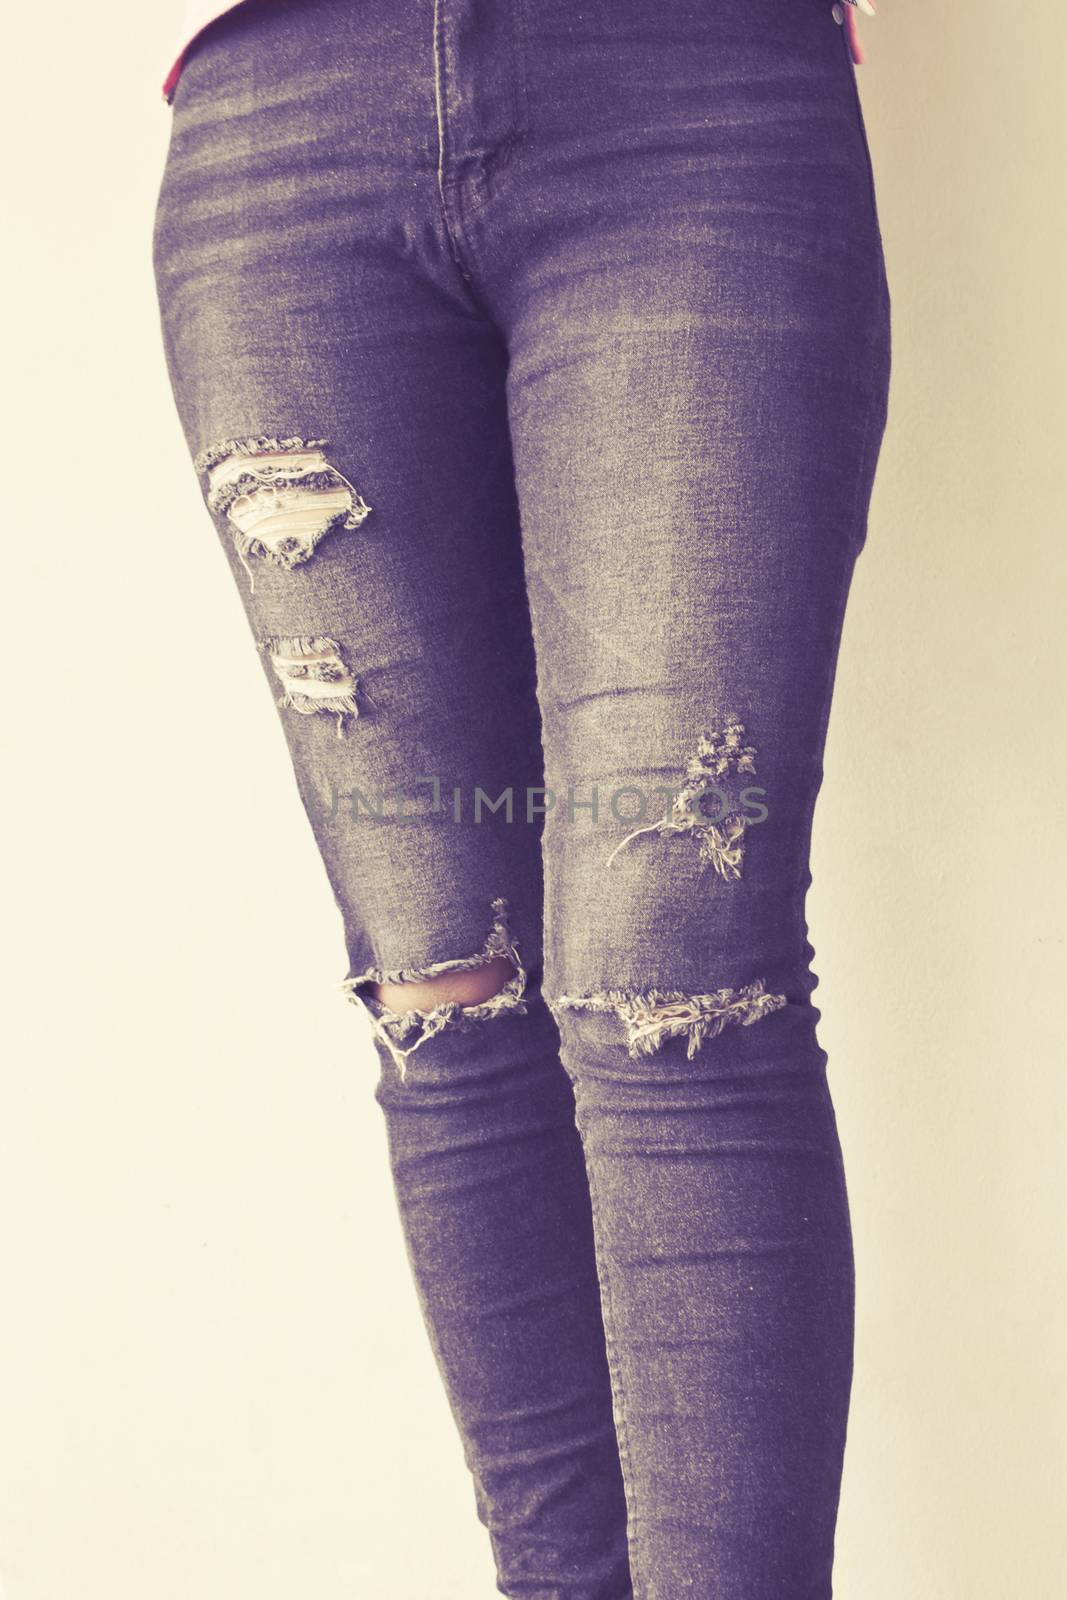 Female wearing jeans vintage tone background